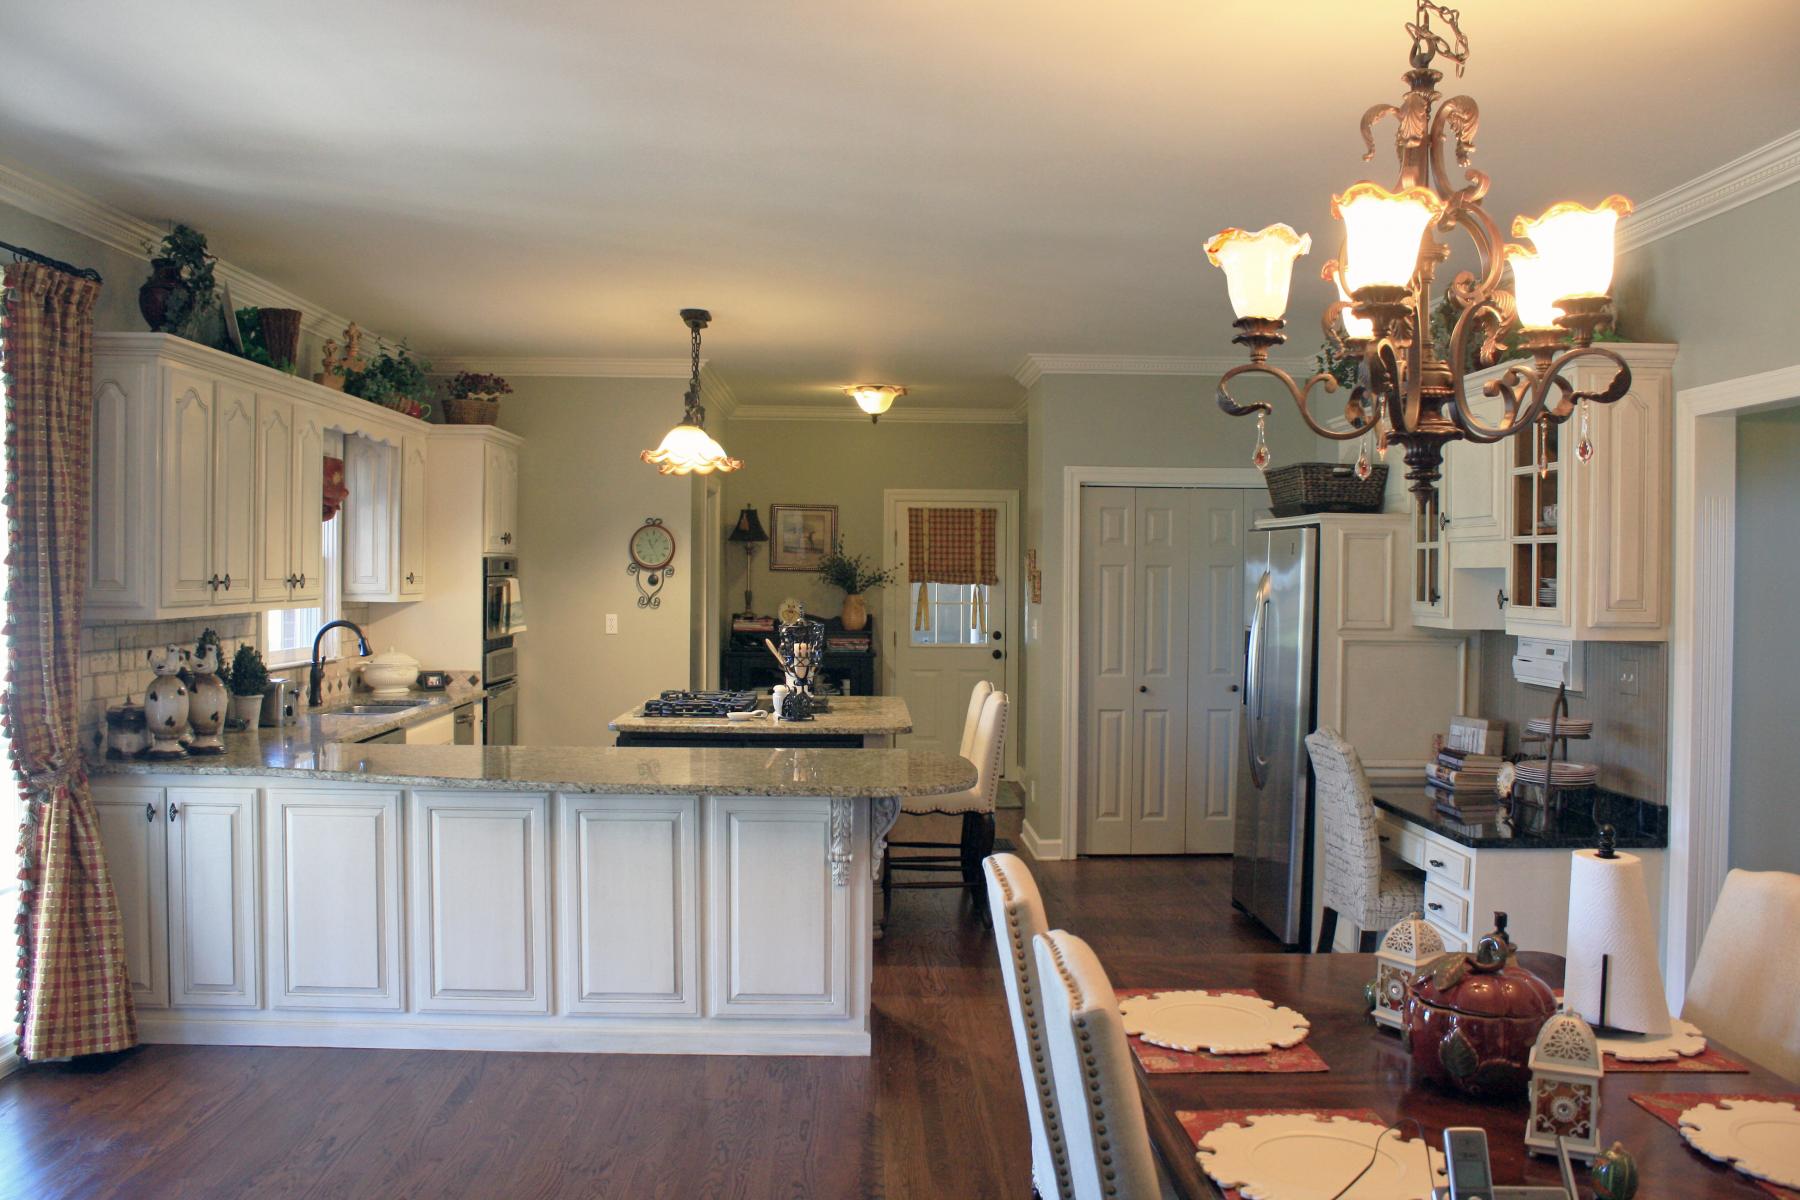 View this Mount Juliet customer’s kitchen cabinet transformation adding a warm modern Tuscan glaze look.